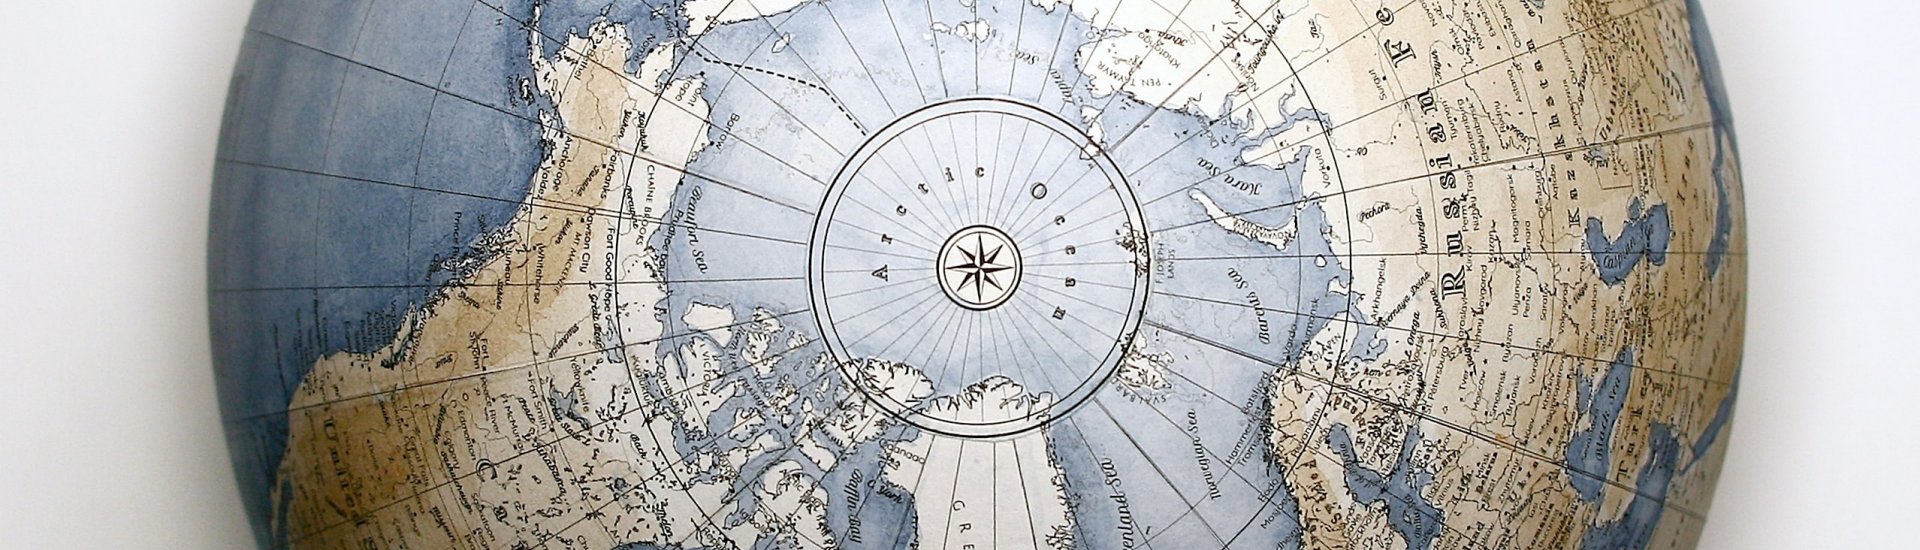 Globe van bovenaf gezien